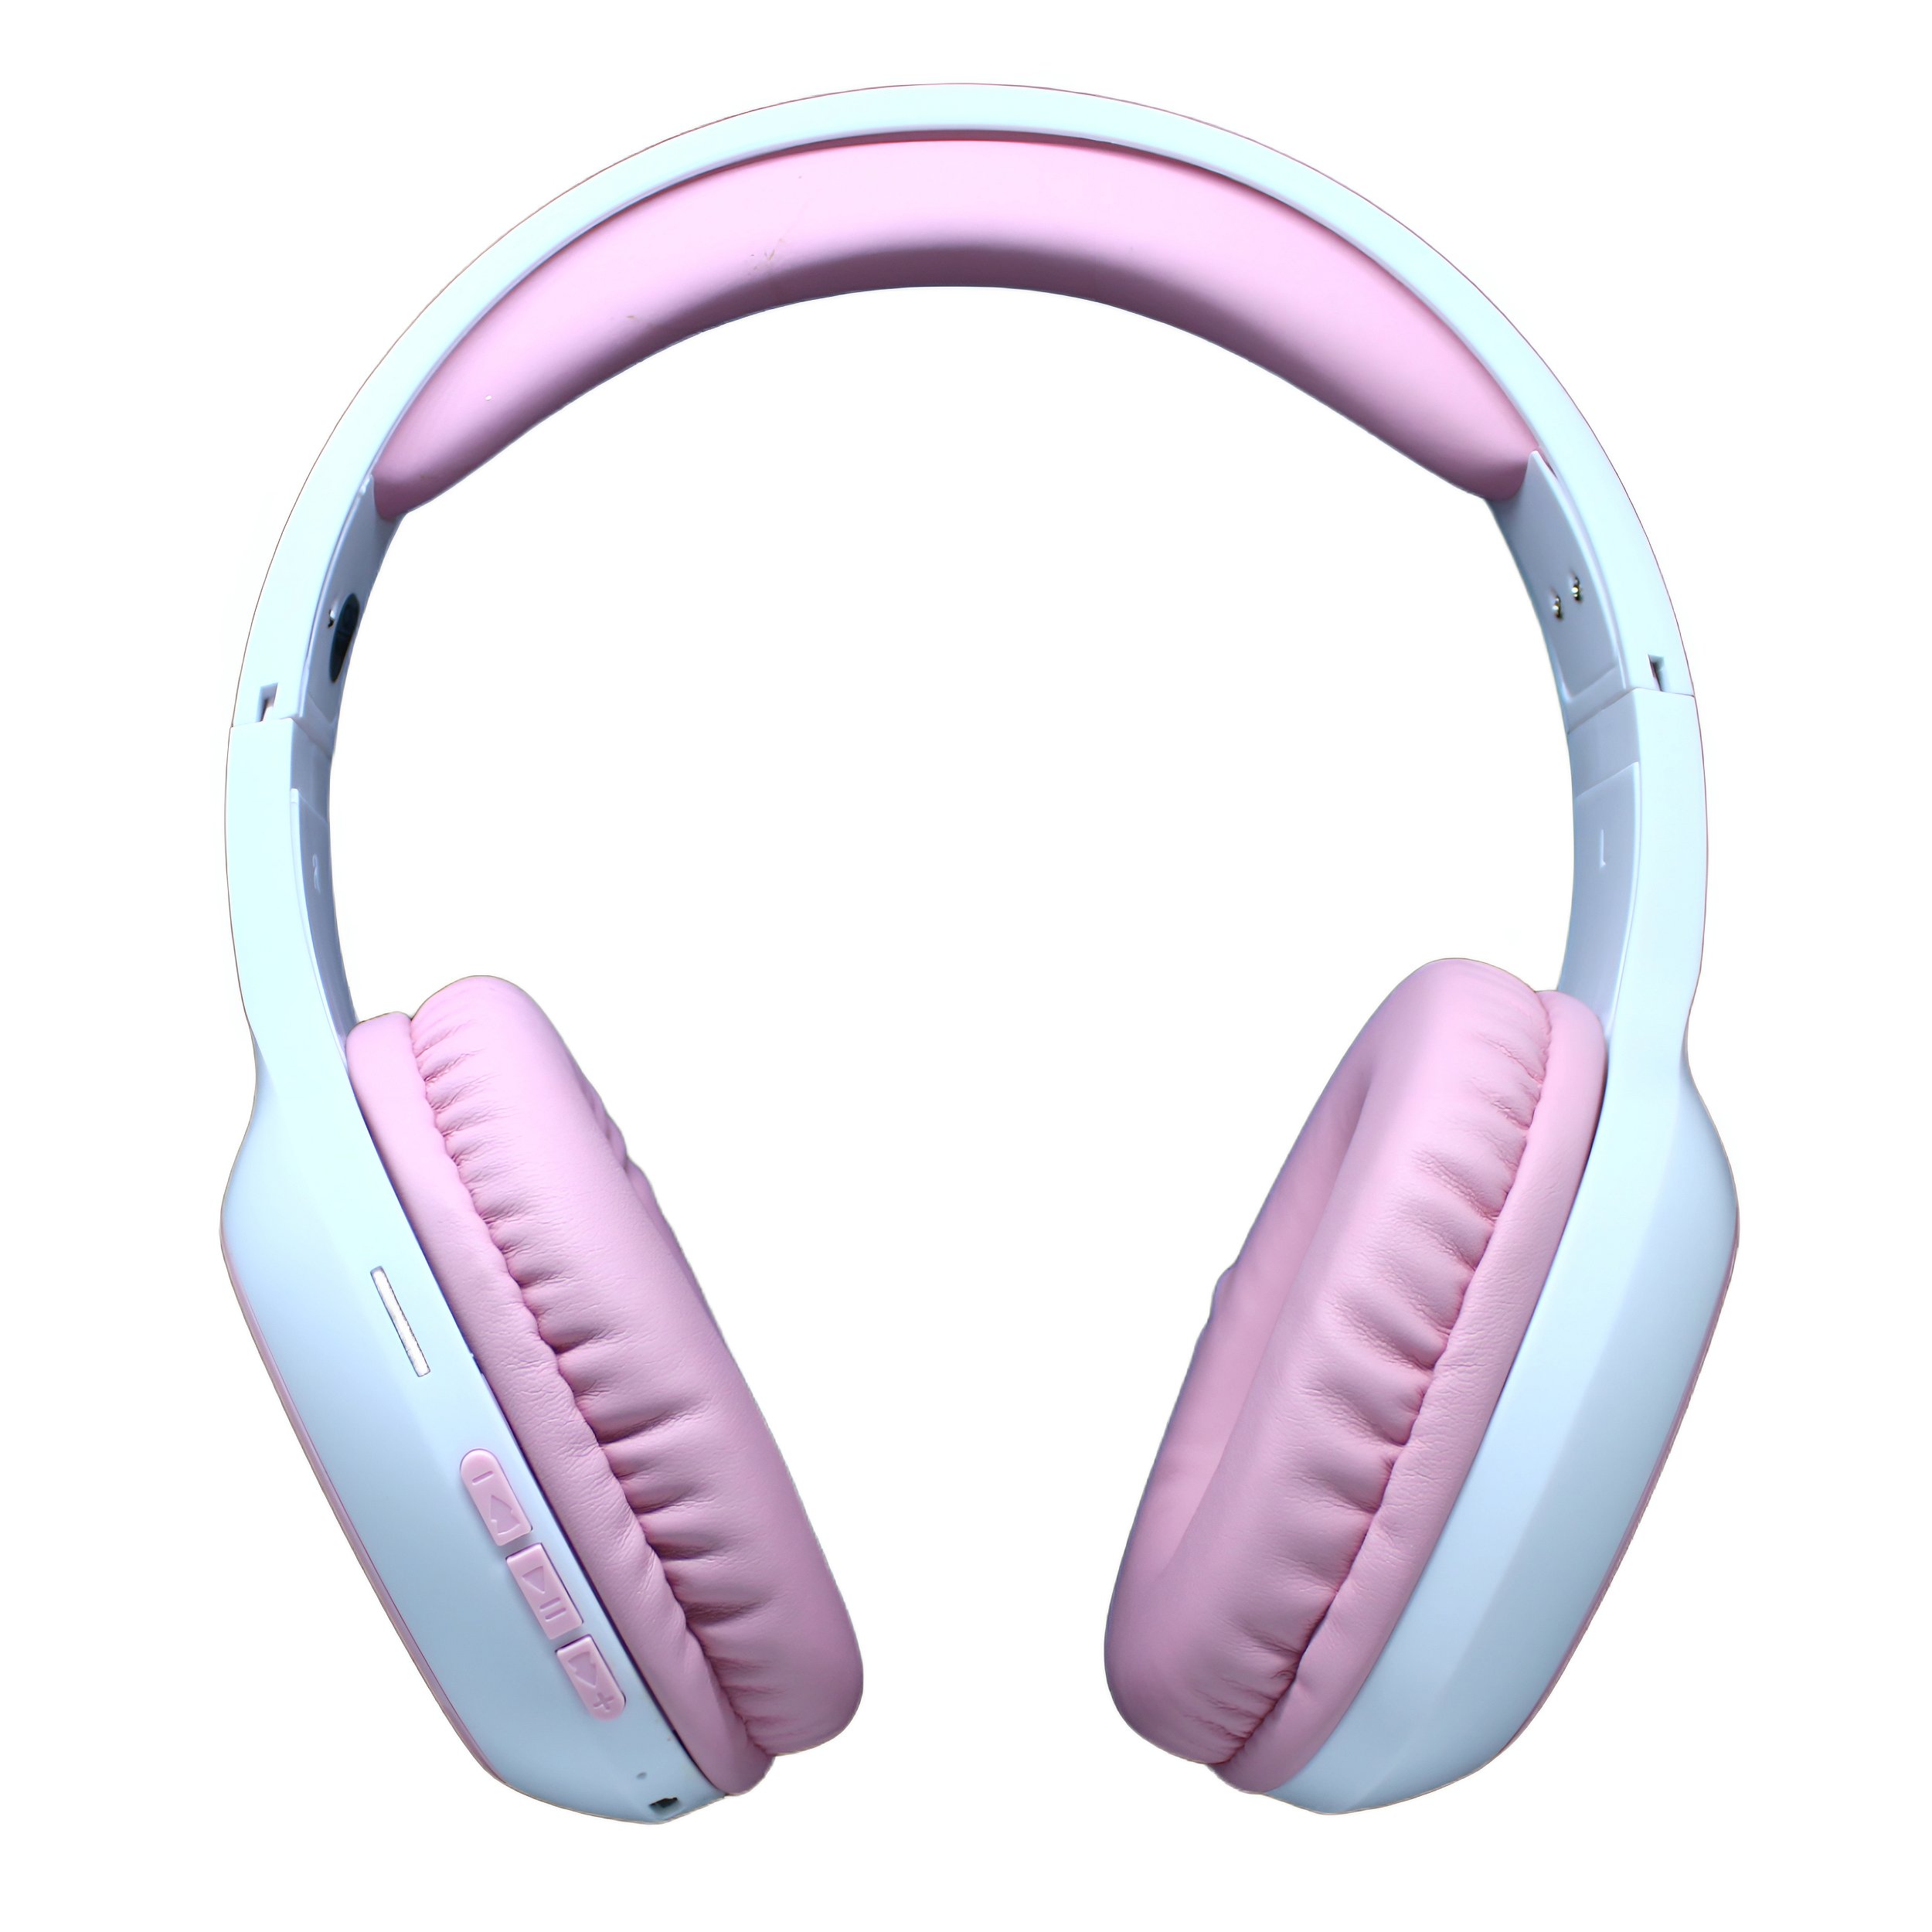 Fone Bluetooth Sem Fio Original Estéreo de Wireless On-ear BRANCO COM ROSA  - VERMAX Online Store